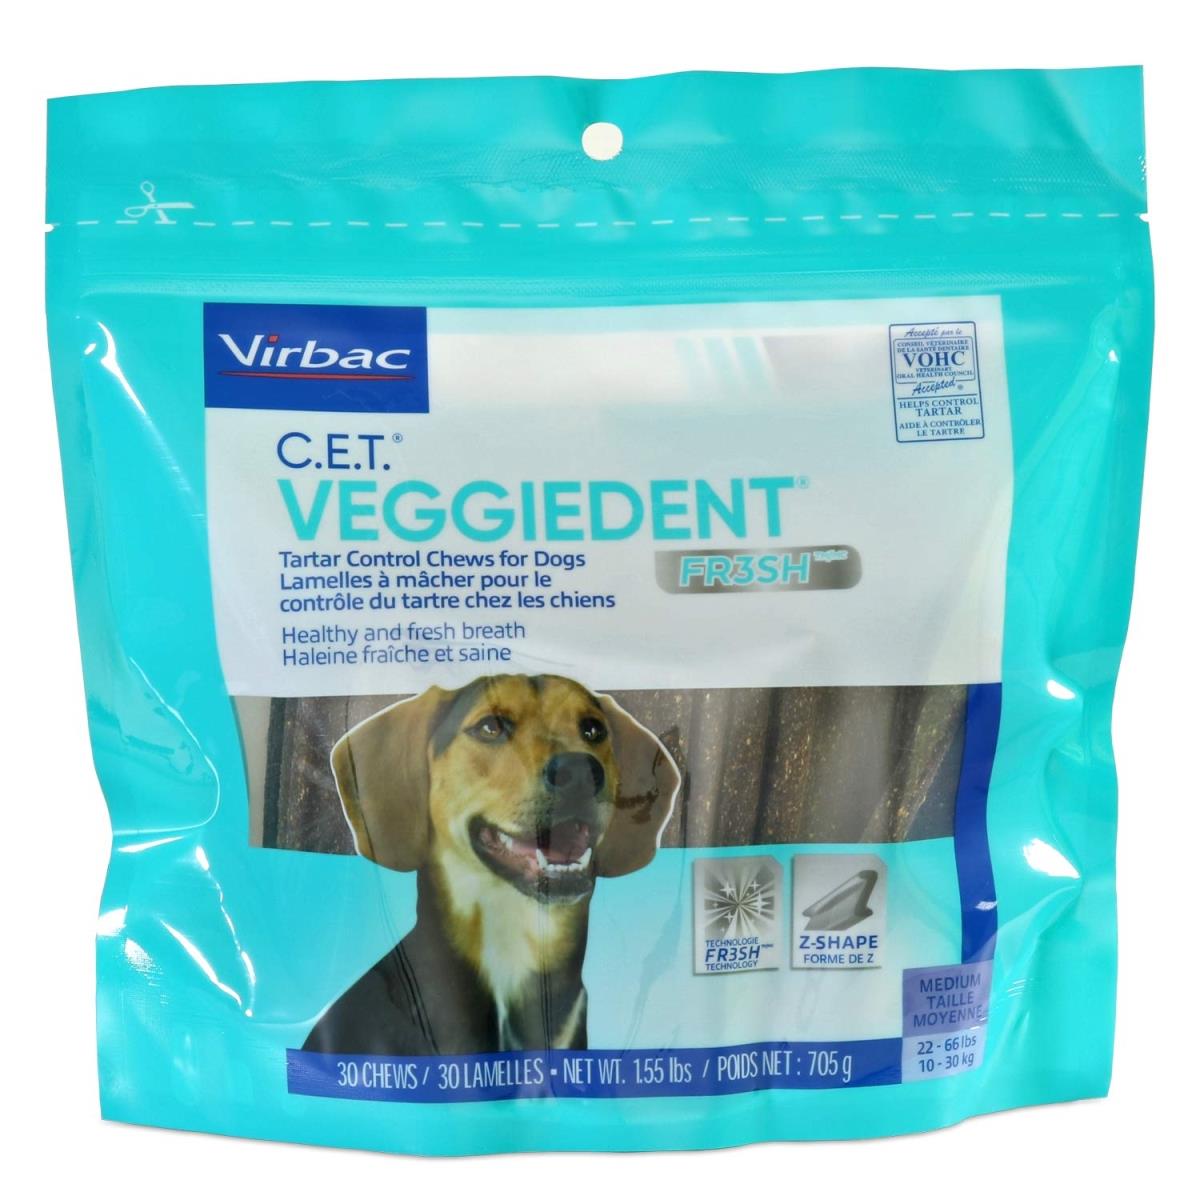 Hc02956 Veggiedent Fr3sh Tartar Control Chews For Small Dog